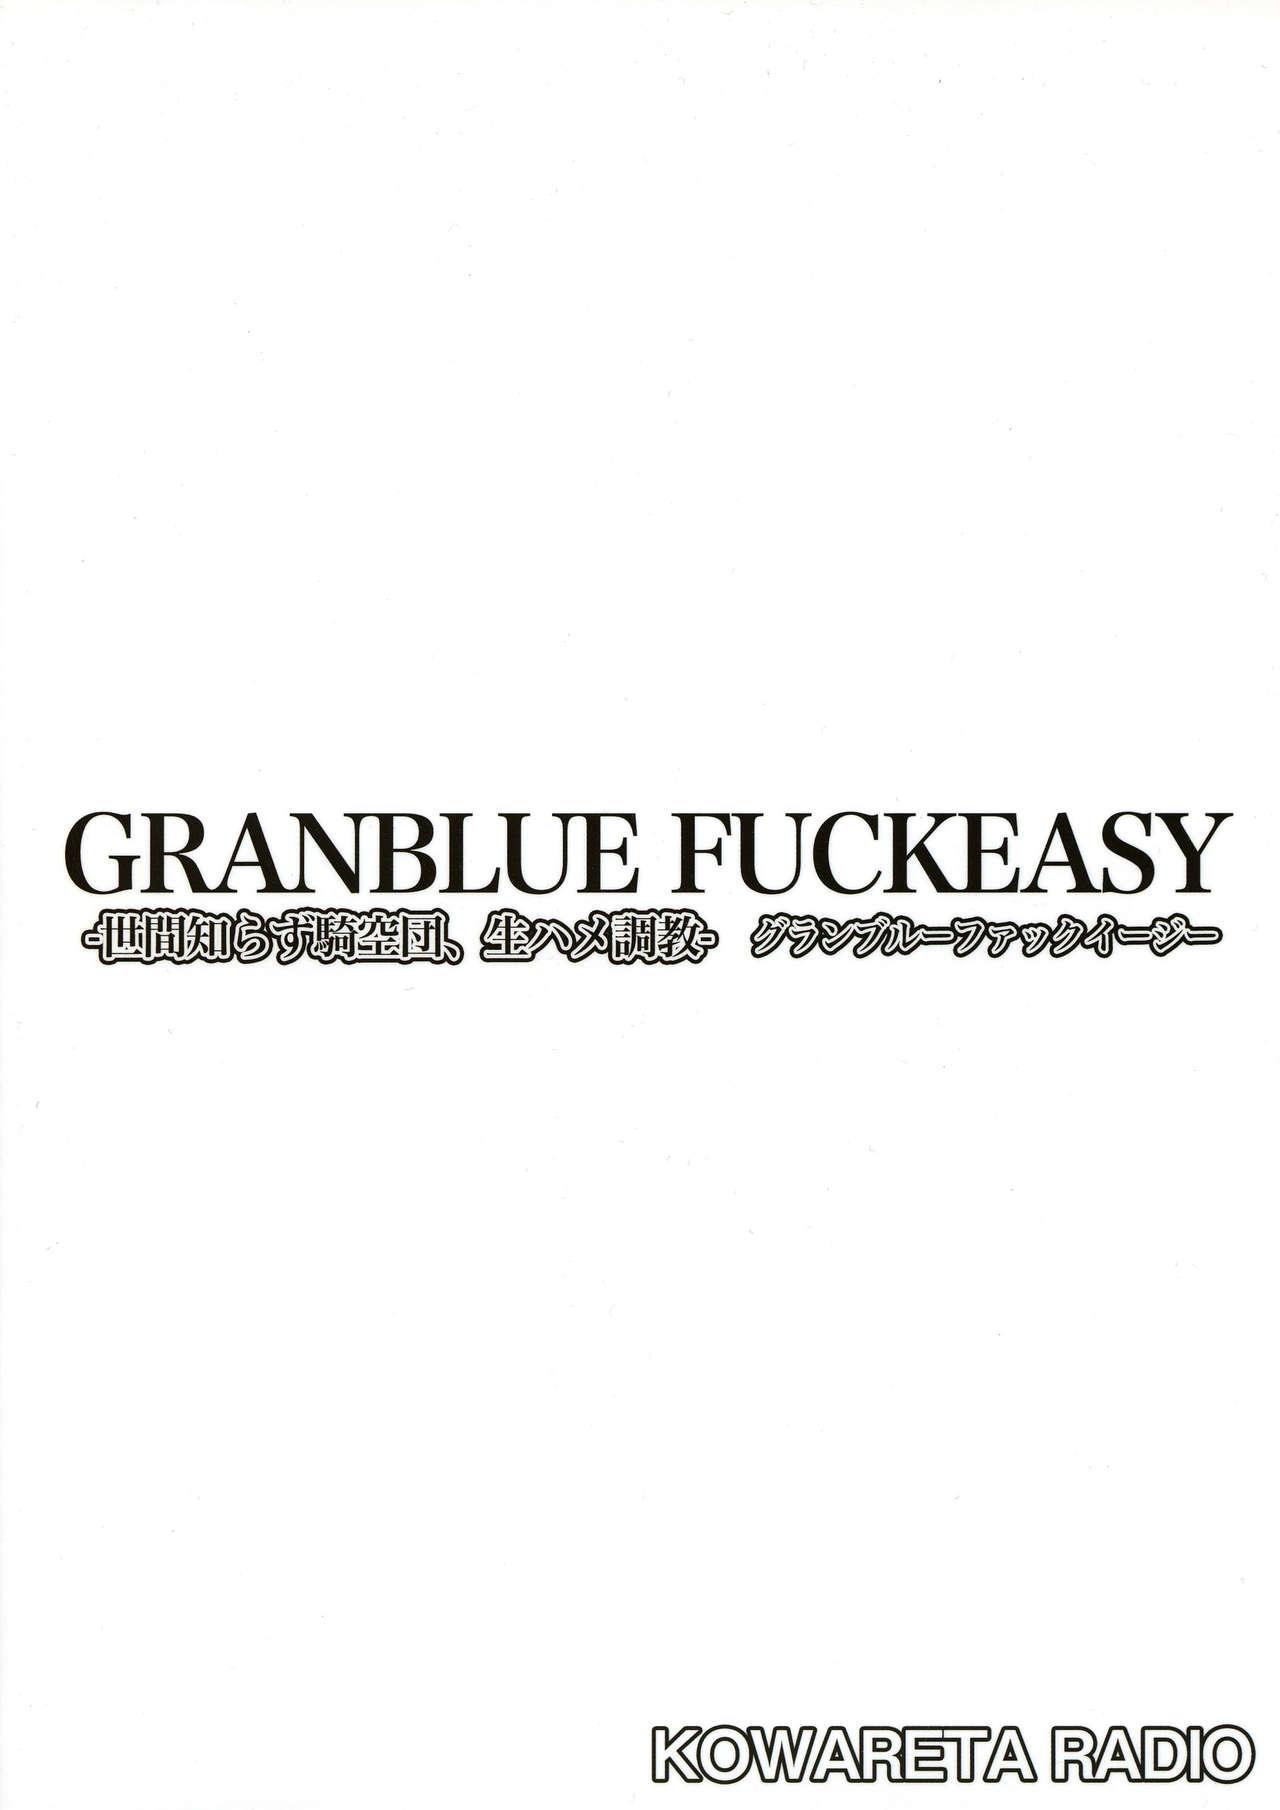 GRANBLUE FUCKEASY 25